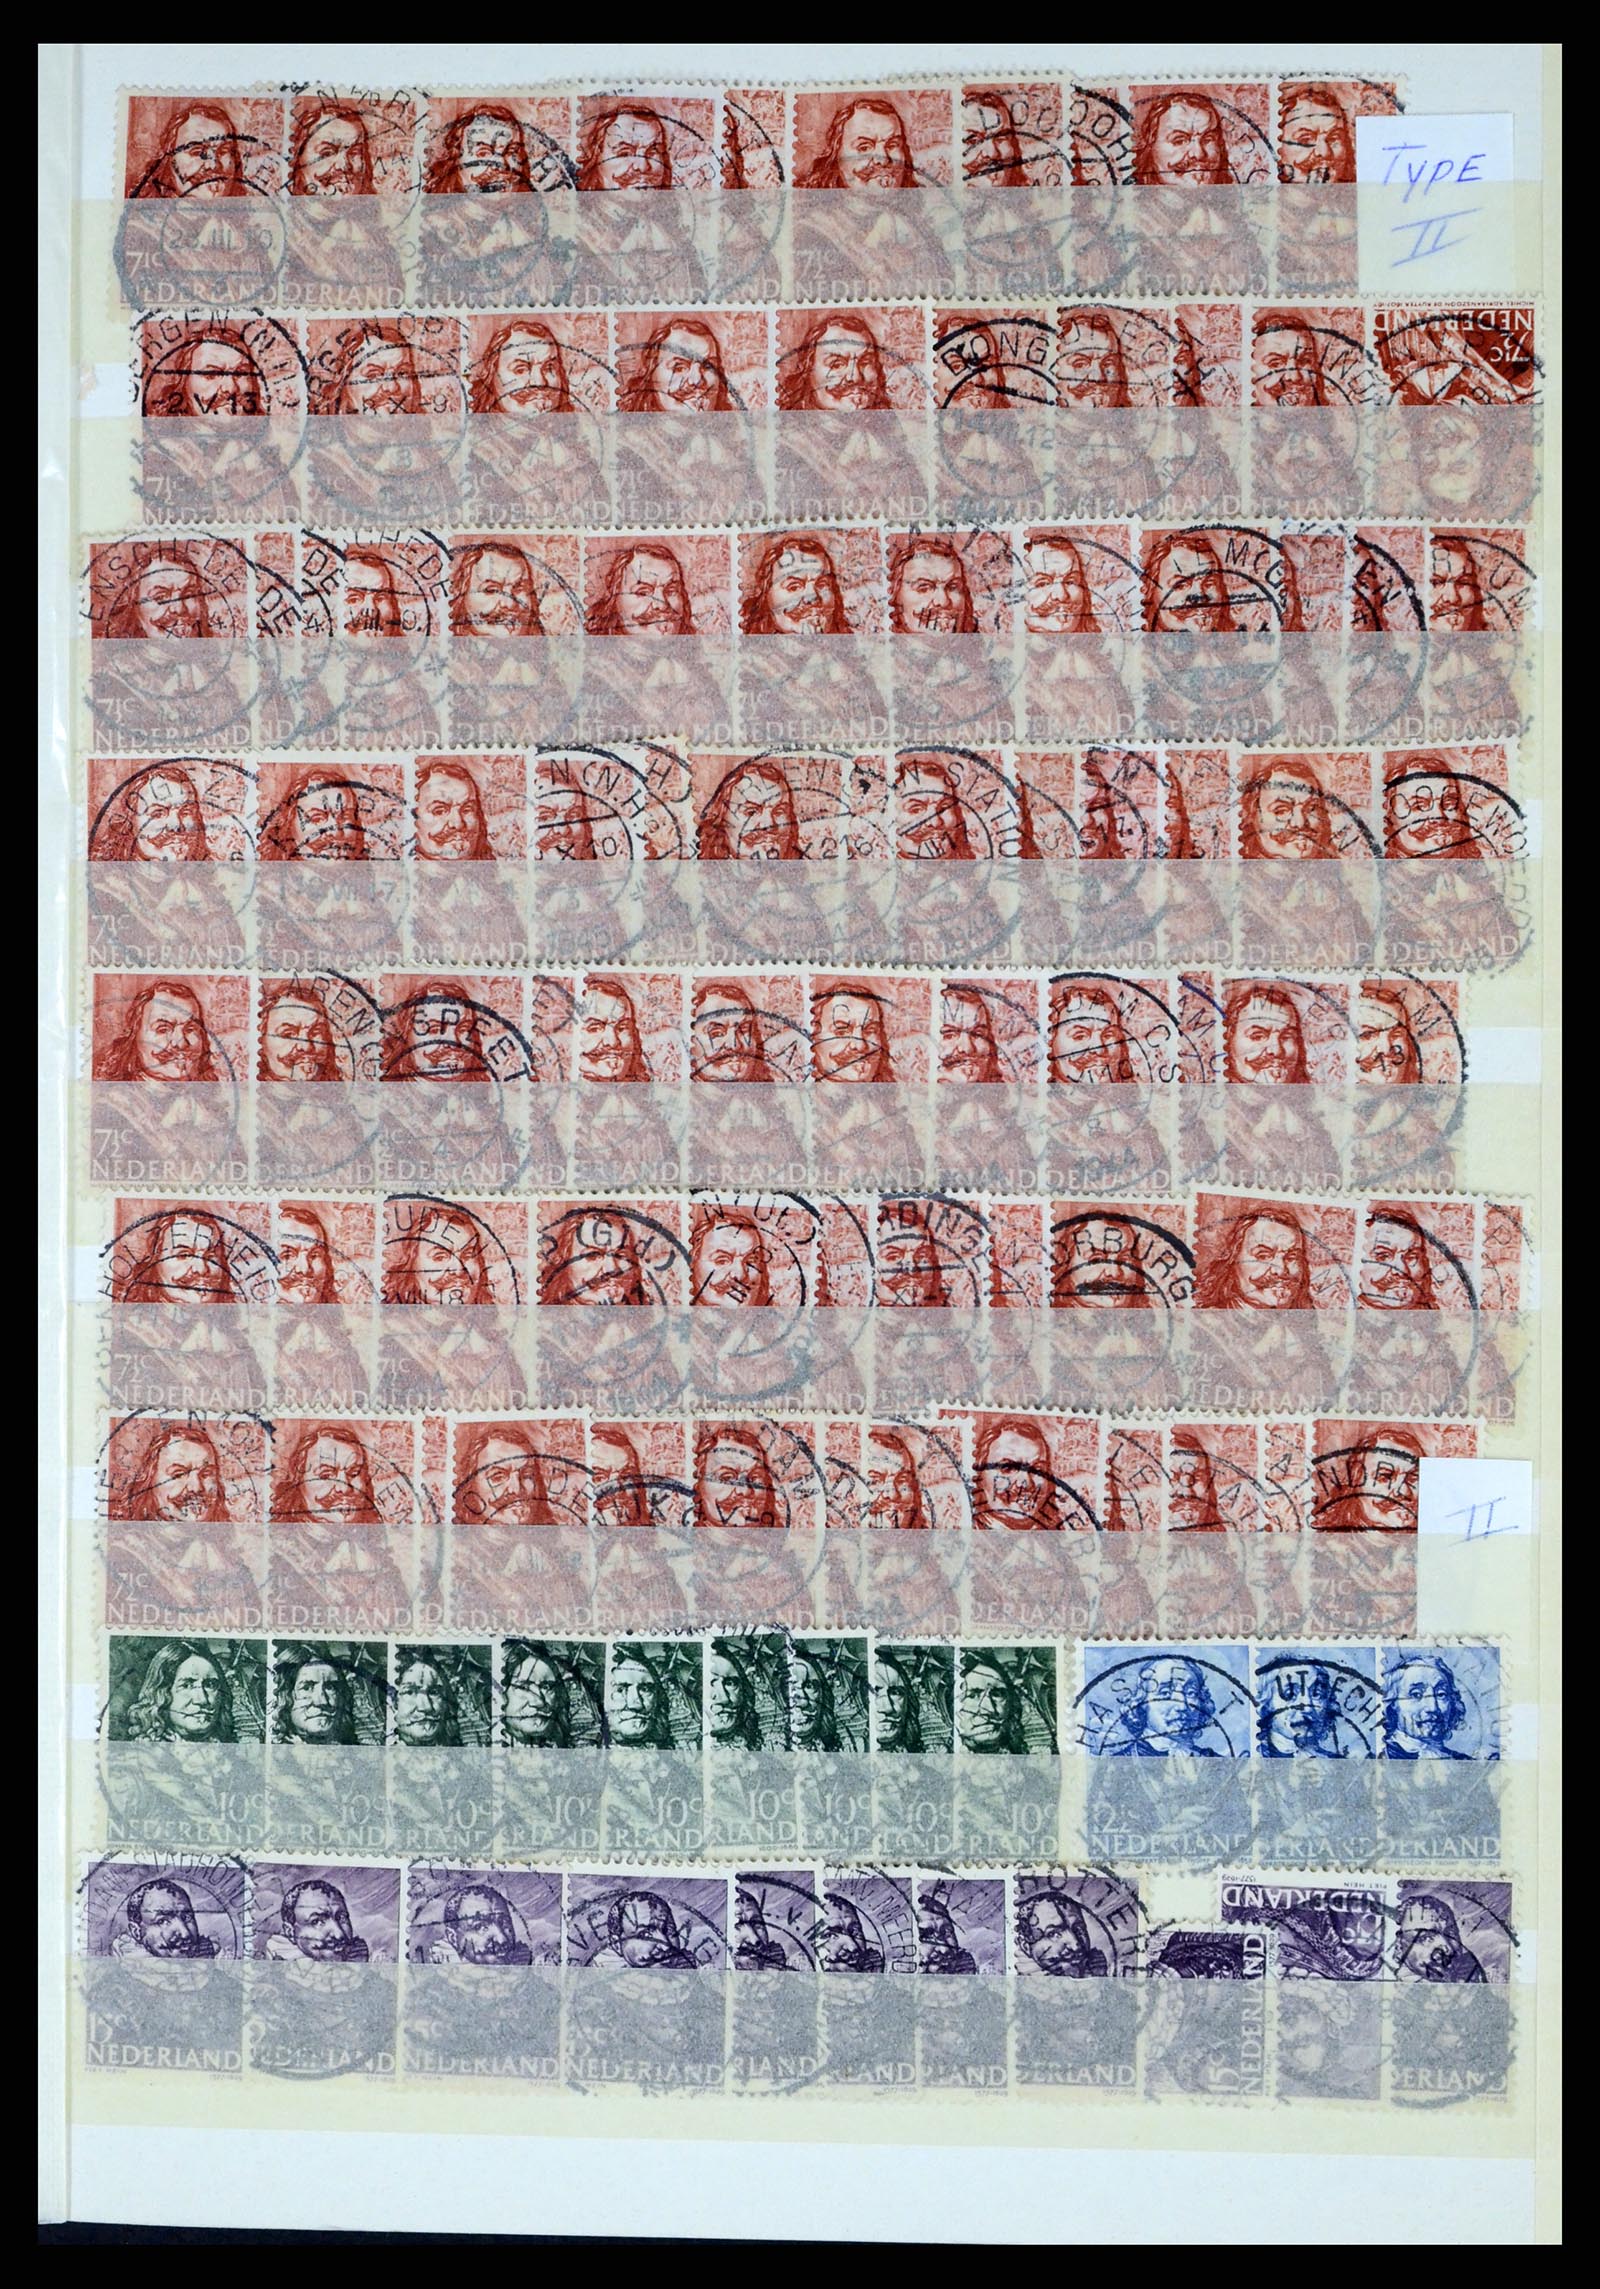 37424 037 - Stamp collection 37424 Netherlands shortbar cancels.